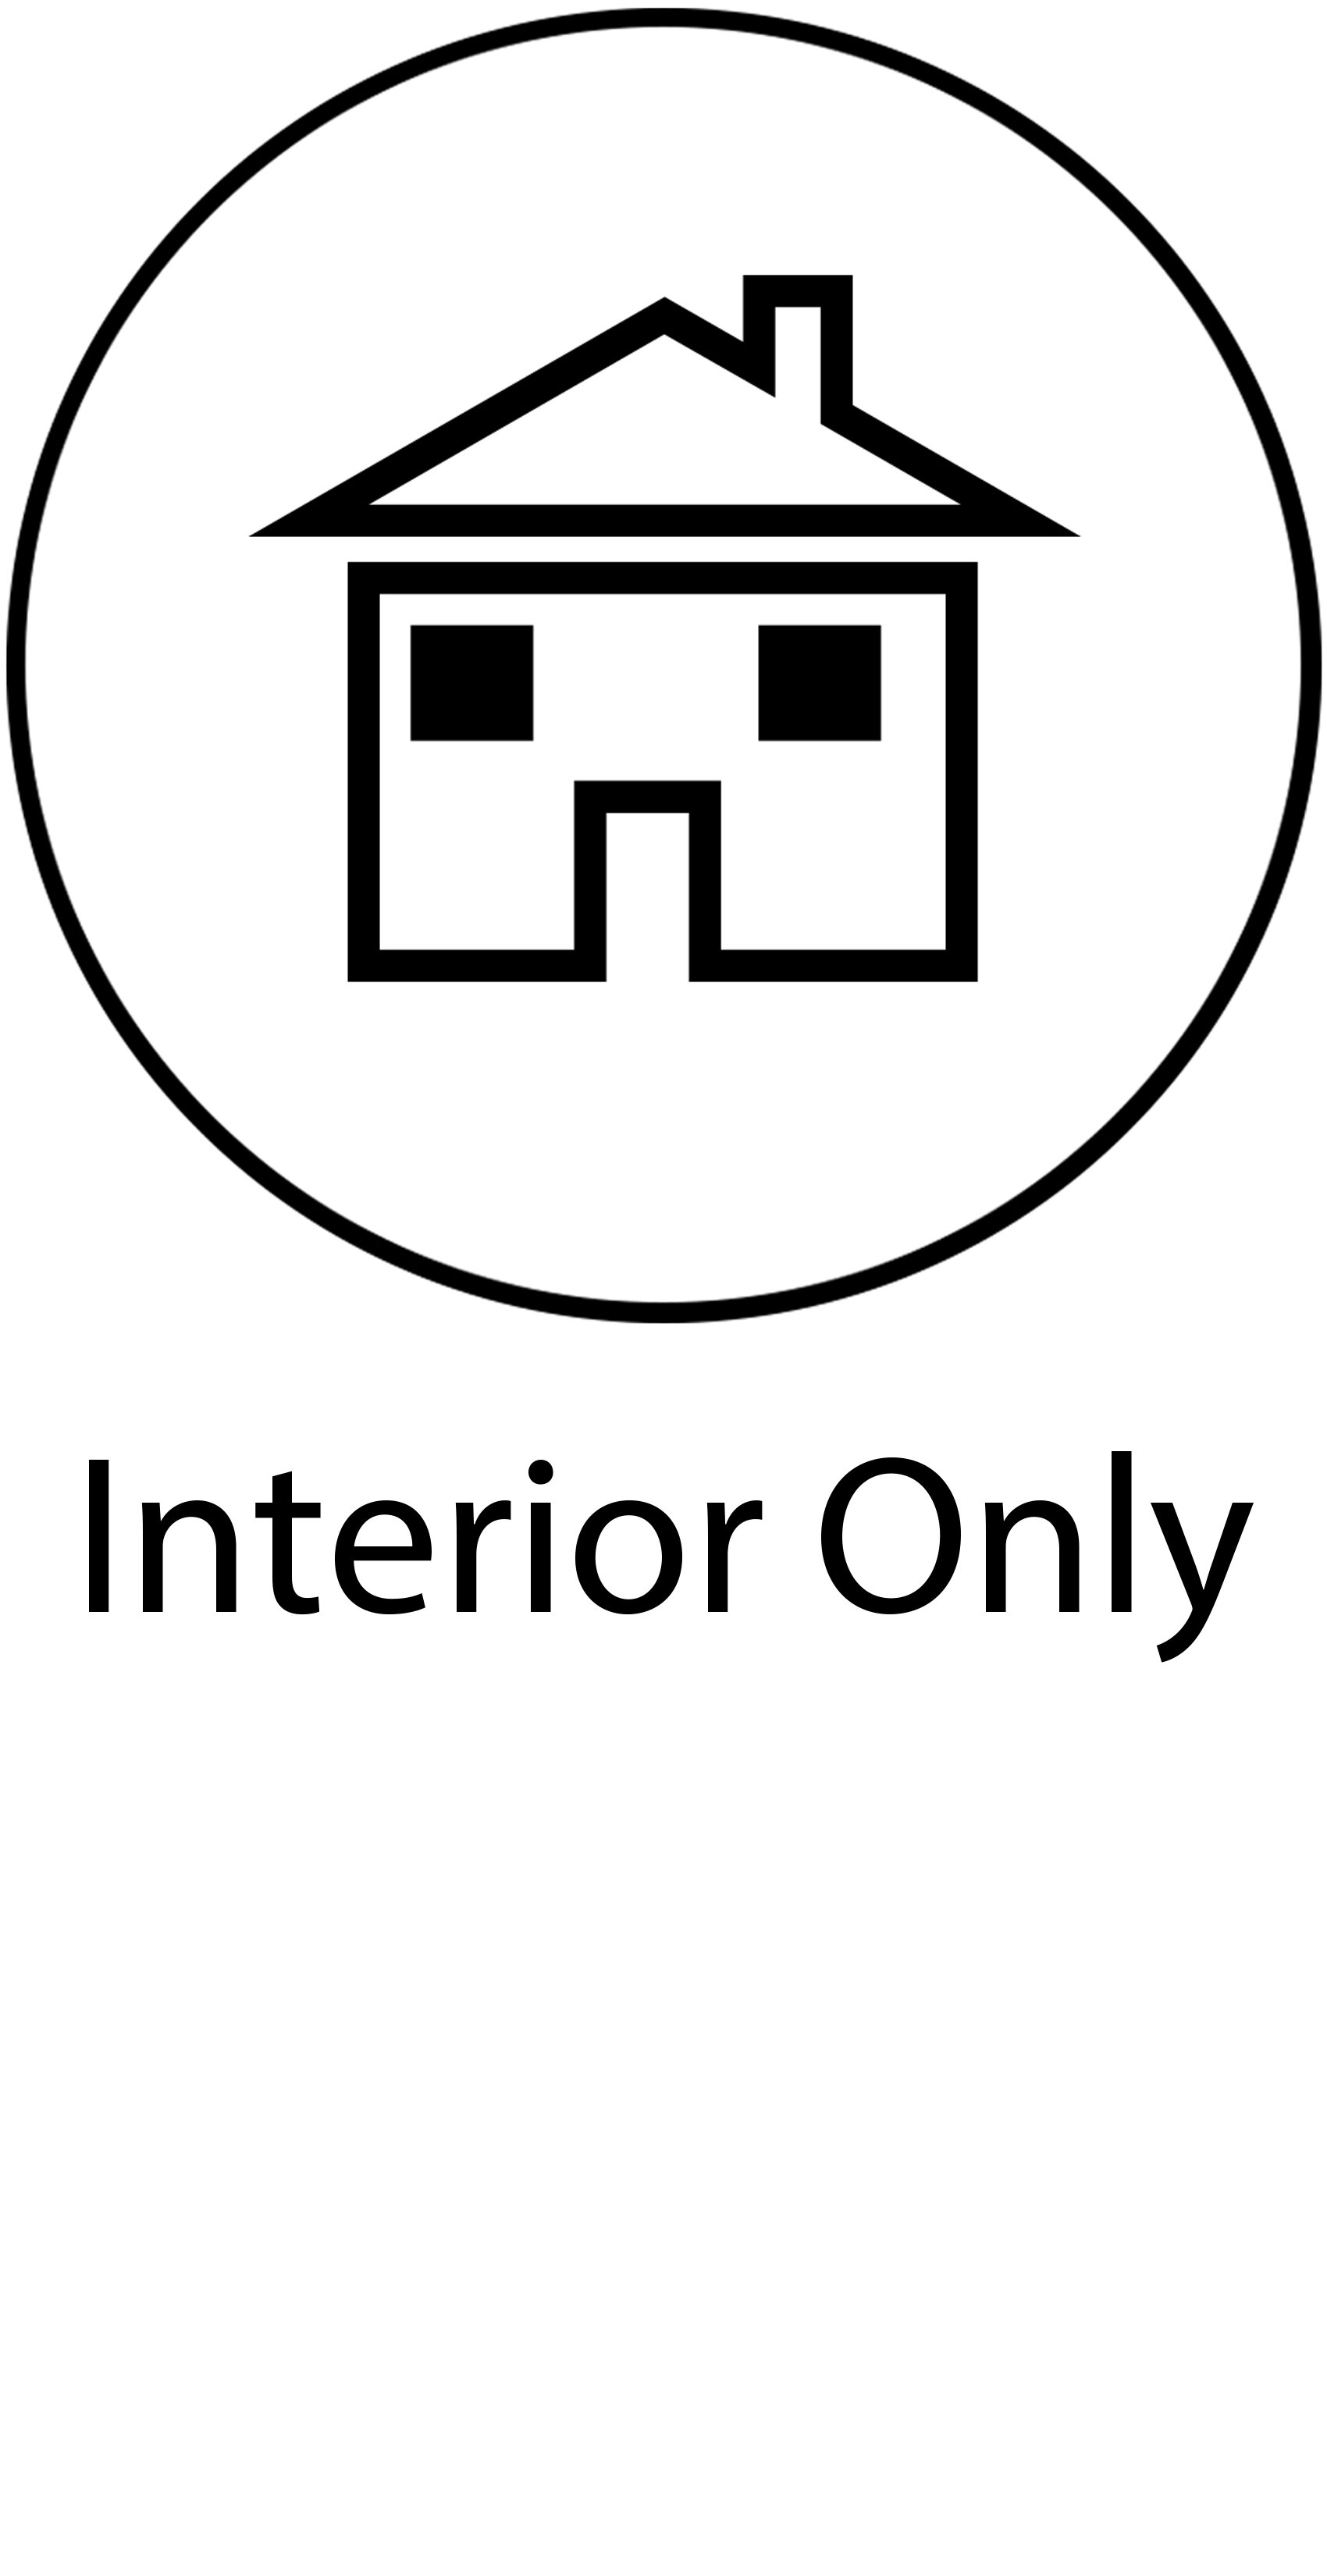 Interior Only.jpg